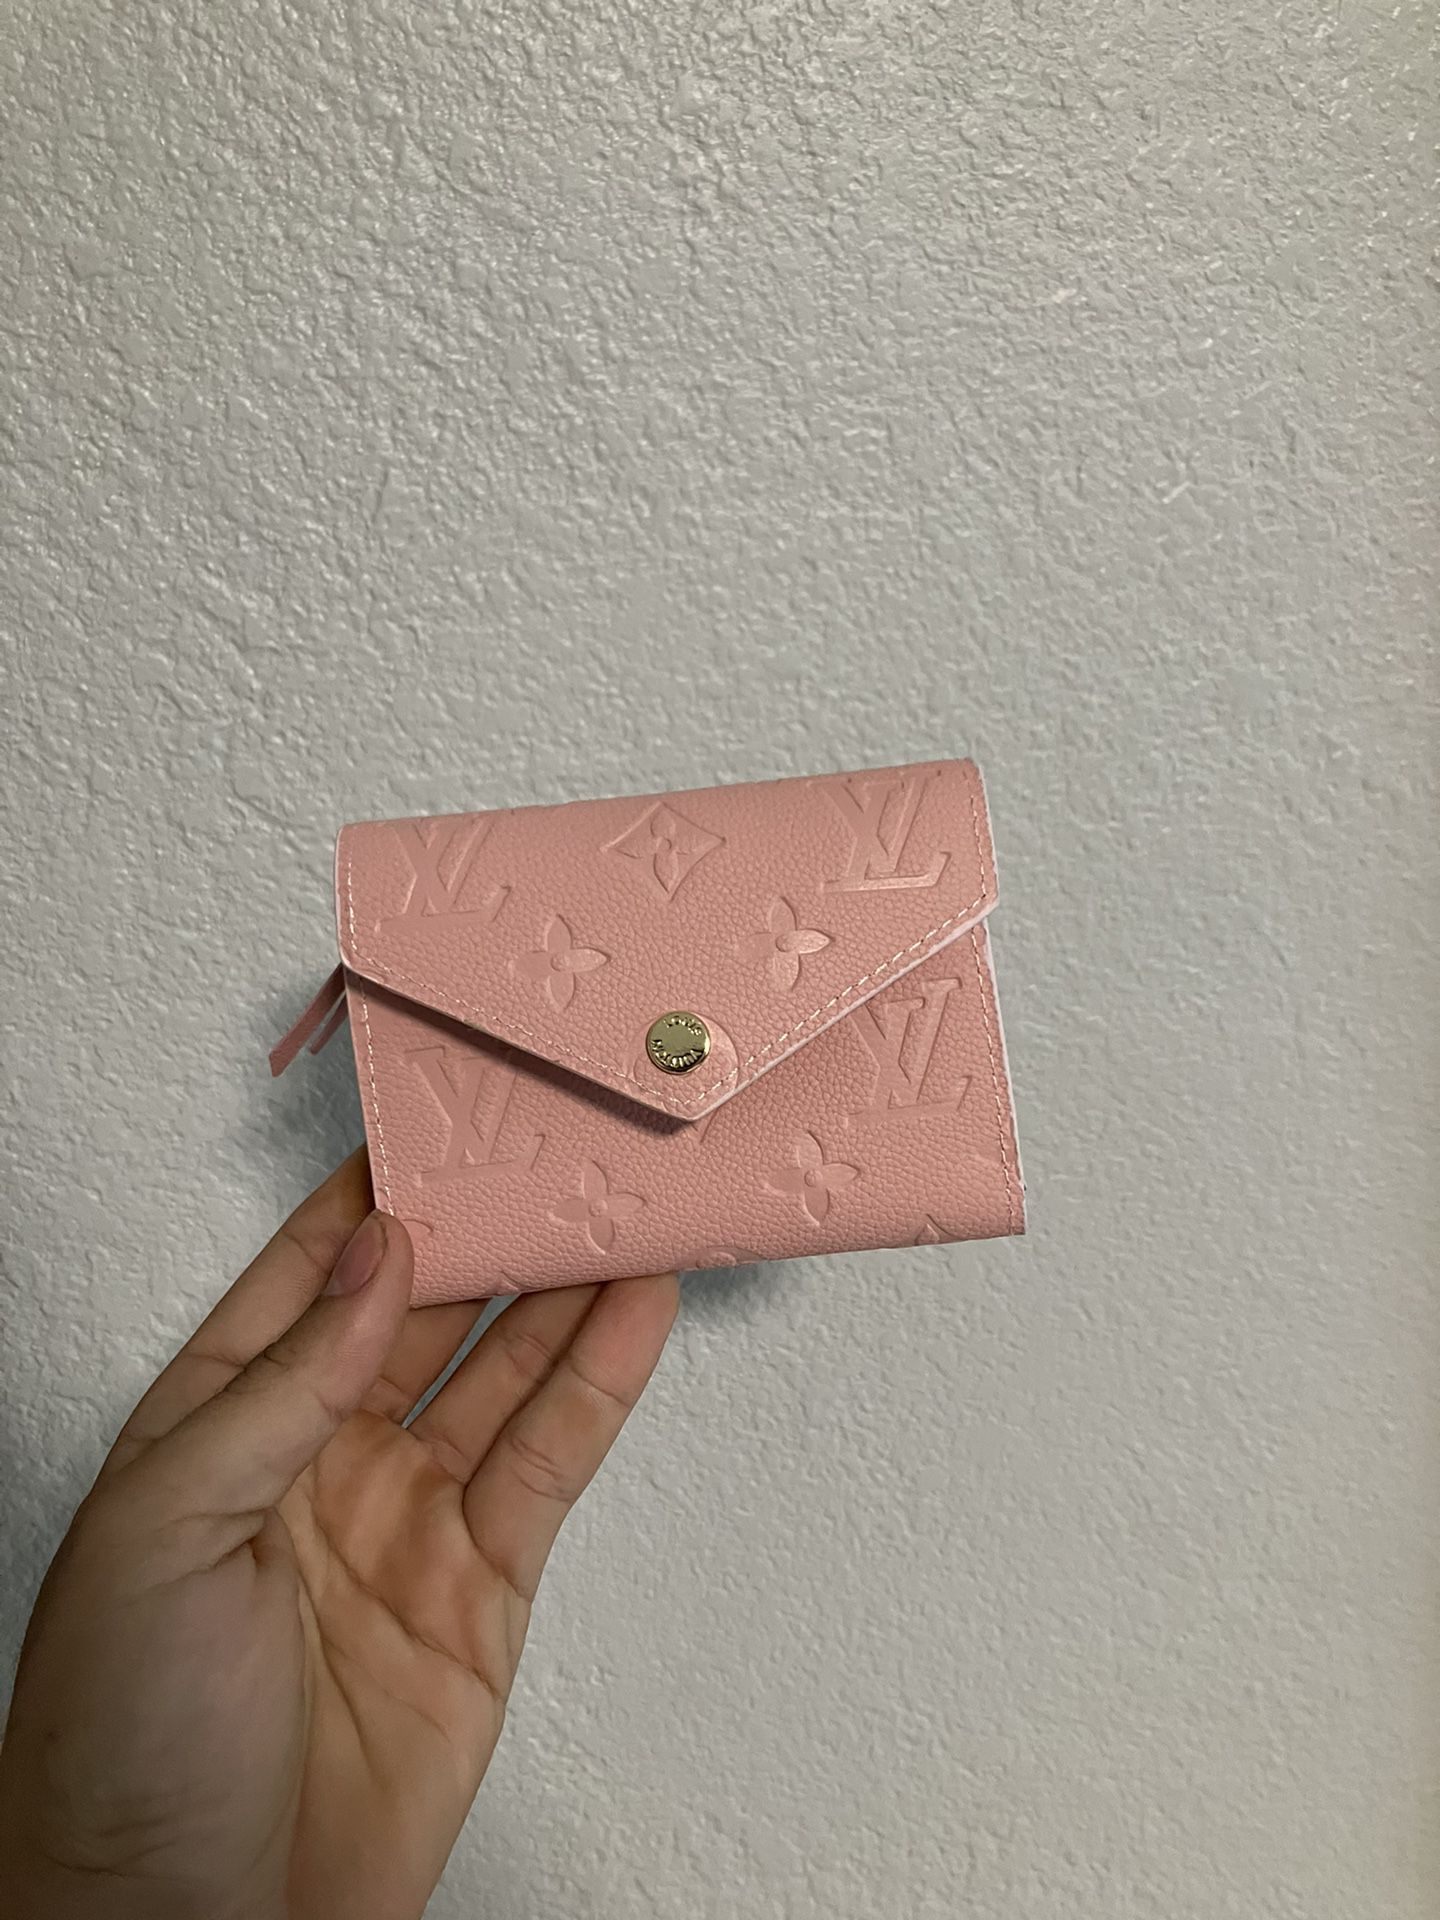 Brand New Designer Wallet 